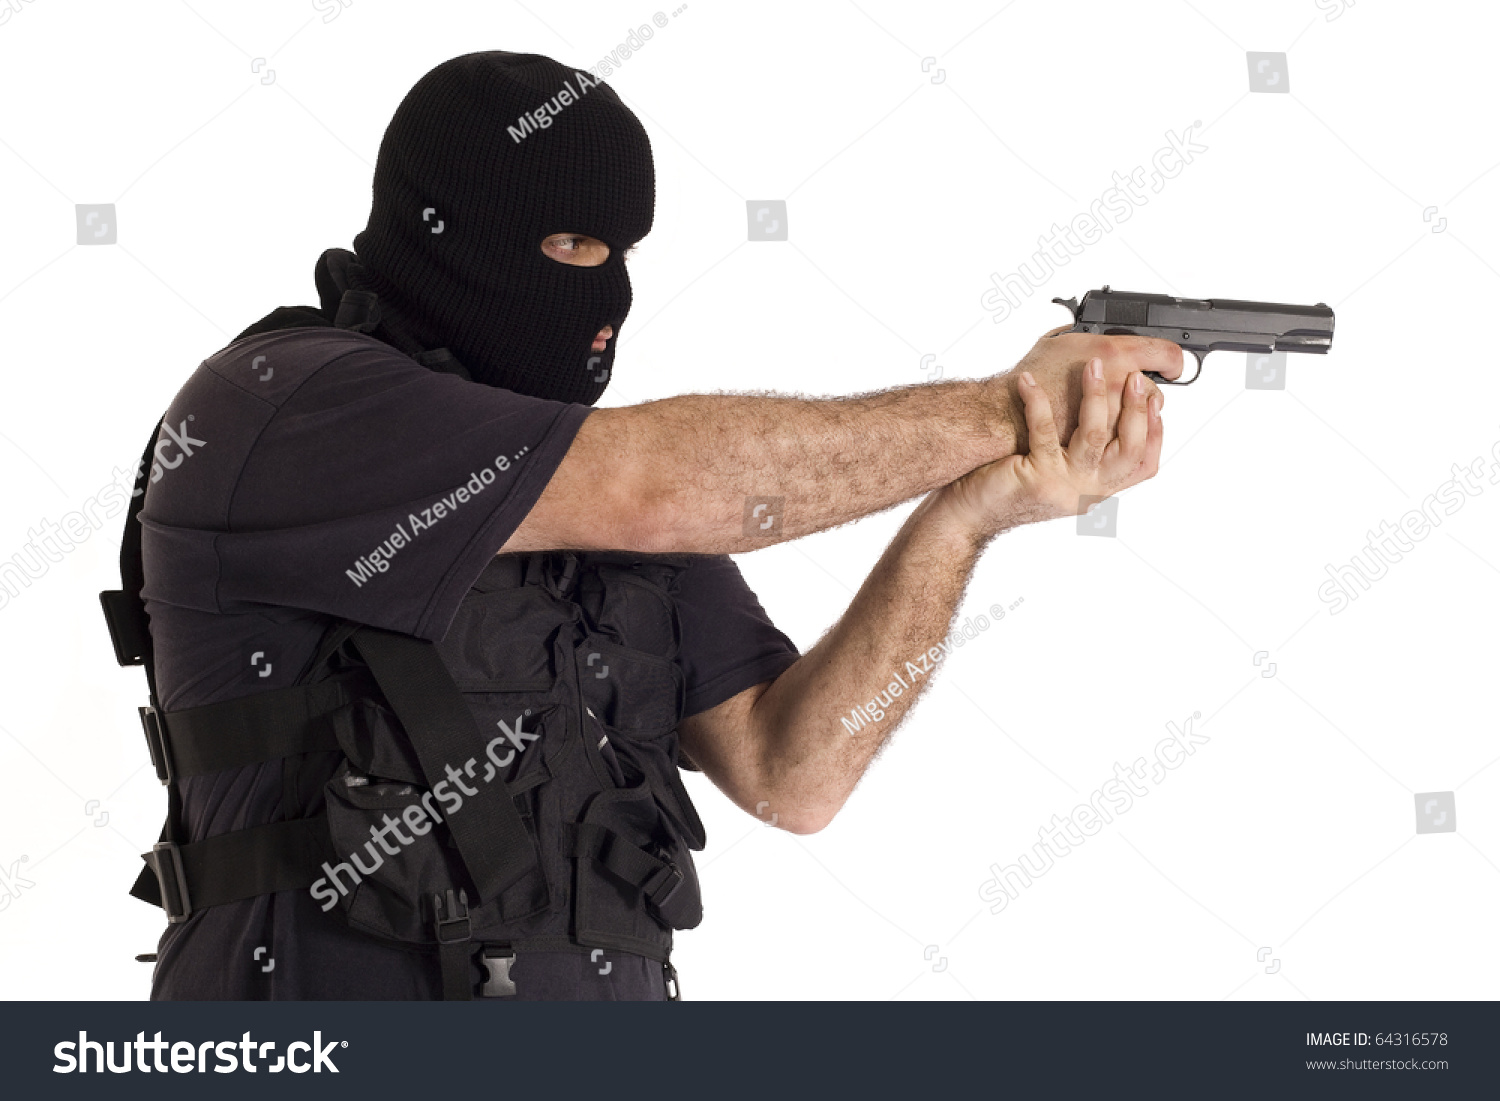 stock-photo-undercover-policeman-wearing-a-hood-balaclava-aiming-sideways-with-a-semi-automatic-gun-64316578.jpg